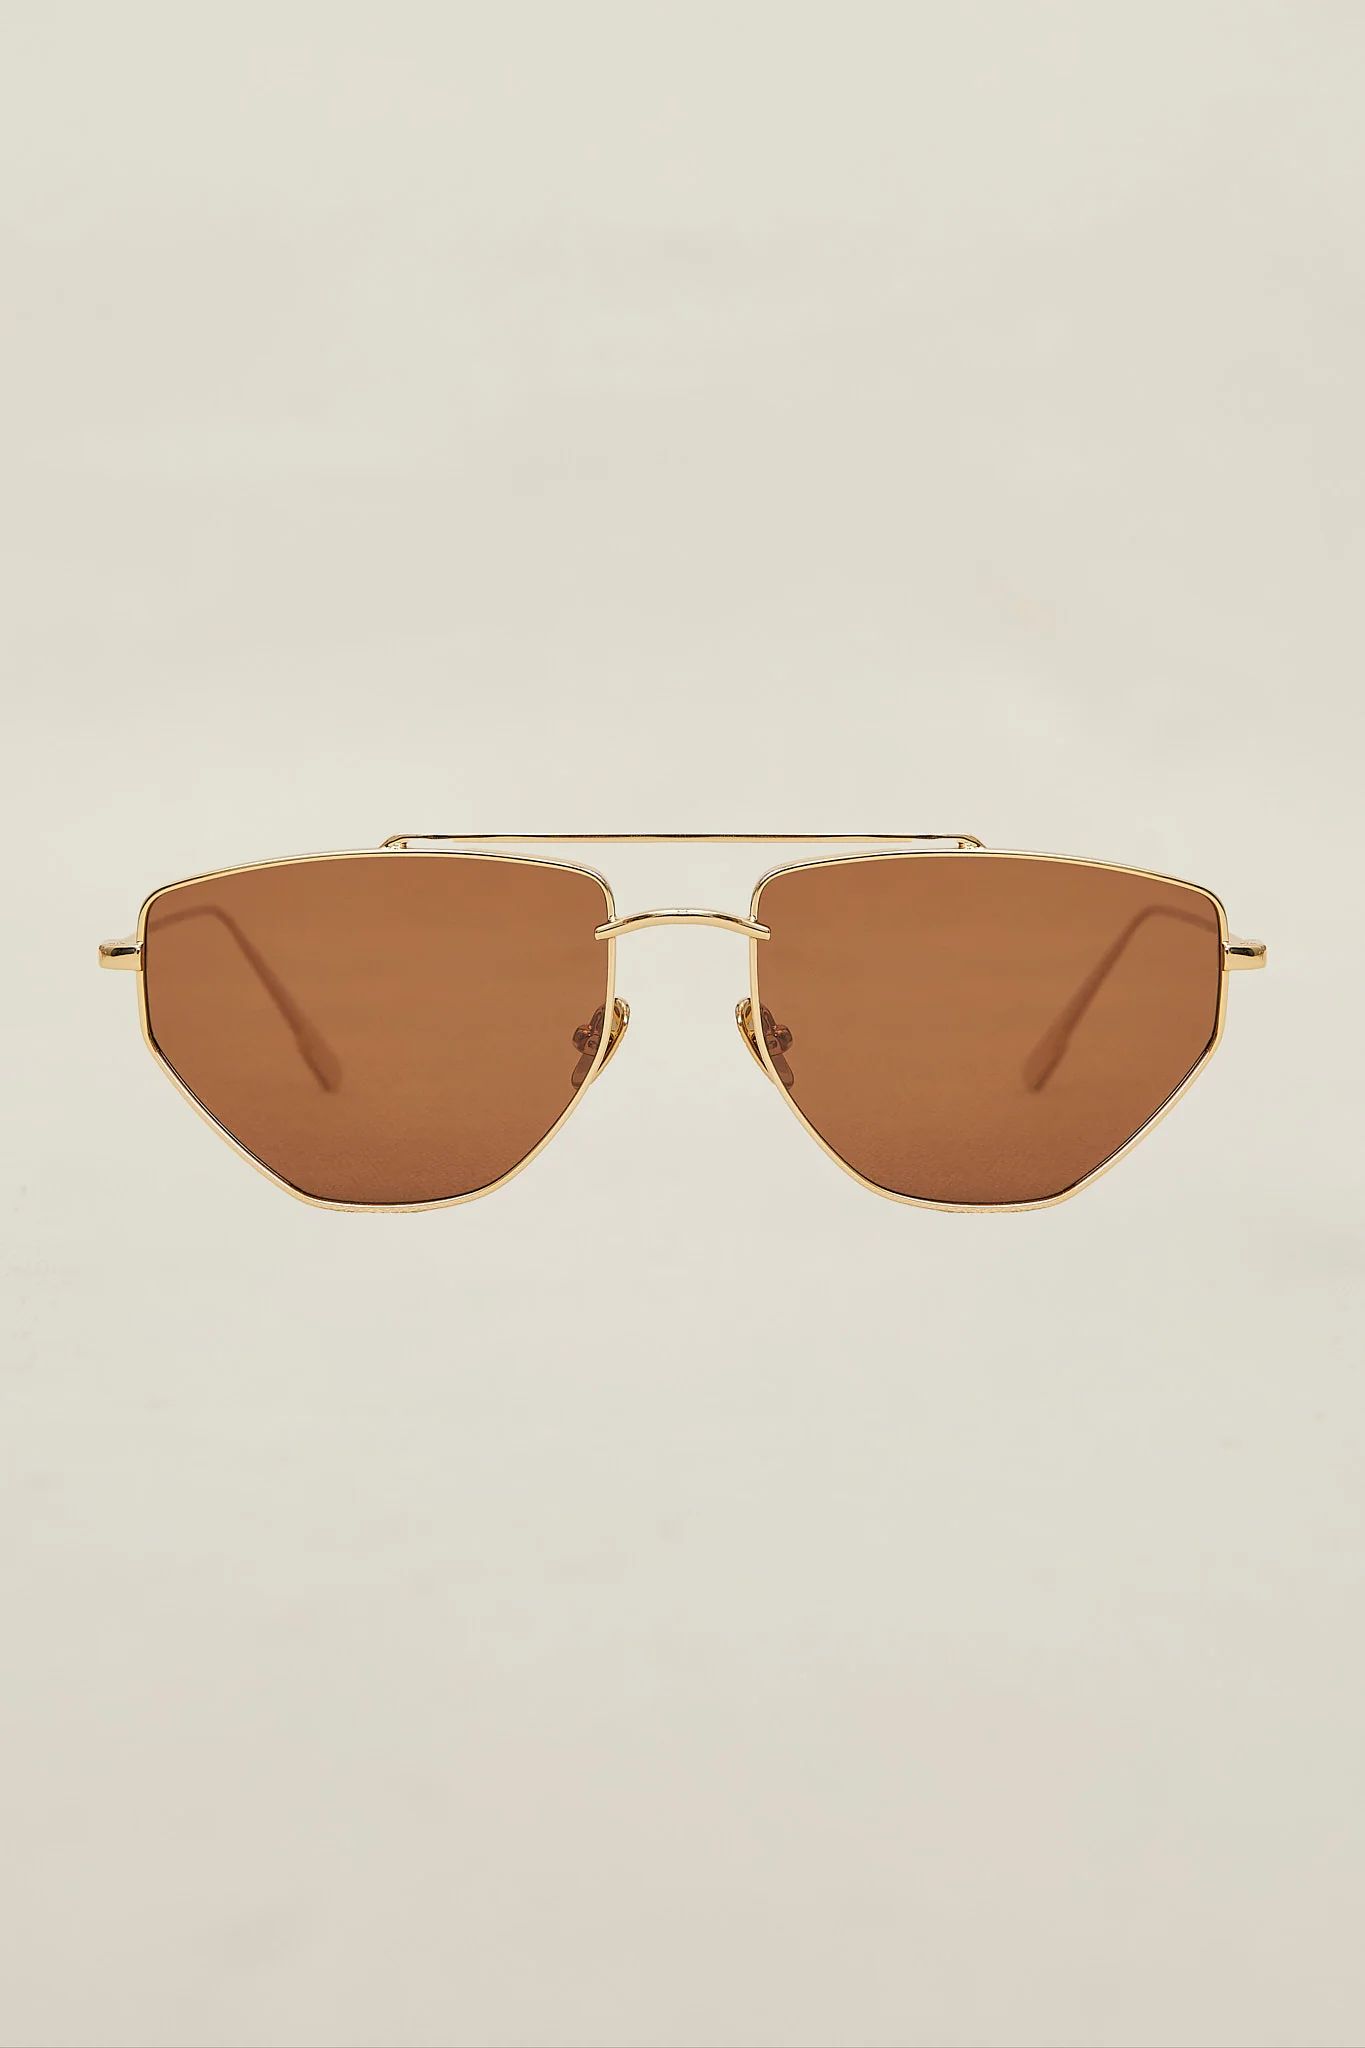 Rio Sunglasses | Devon Windsor